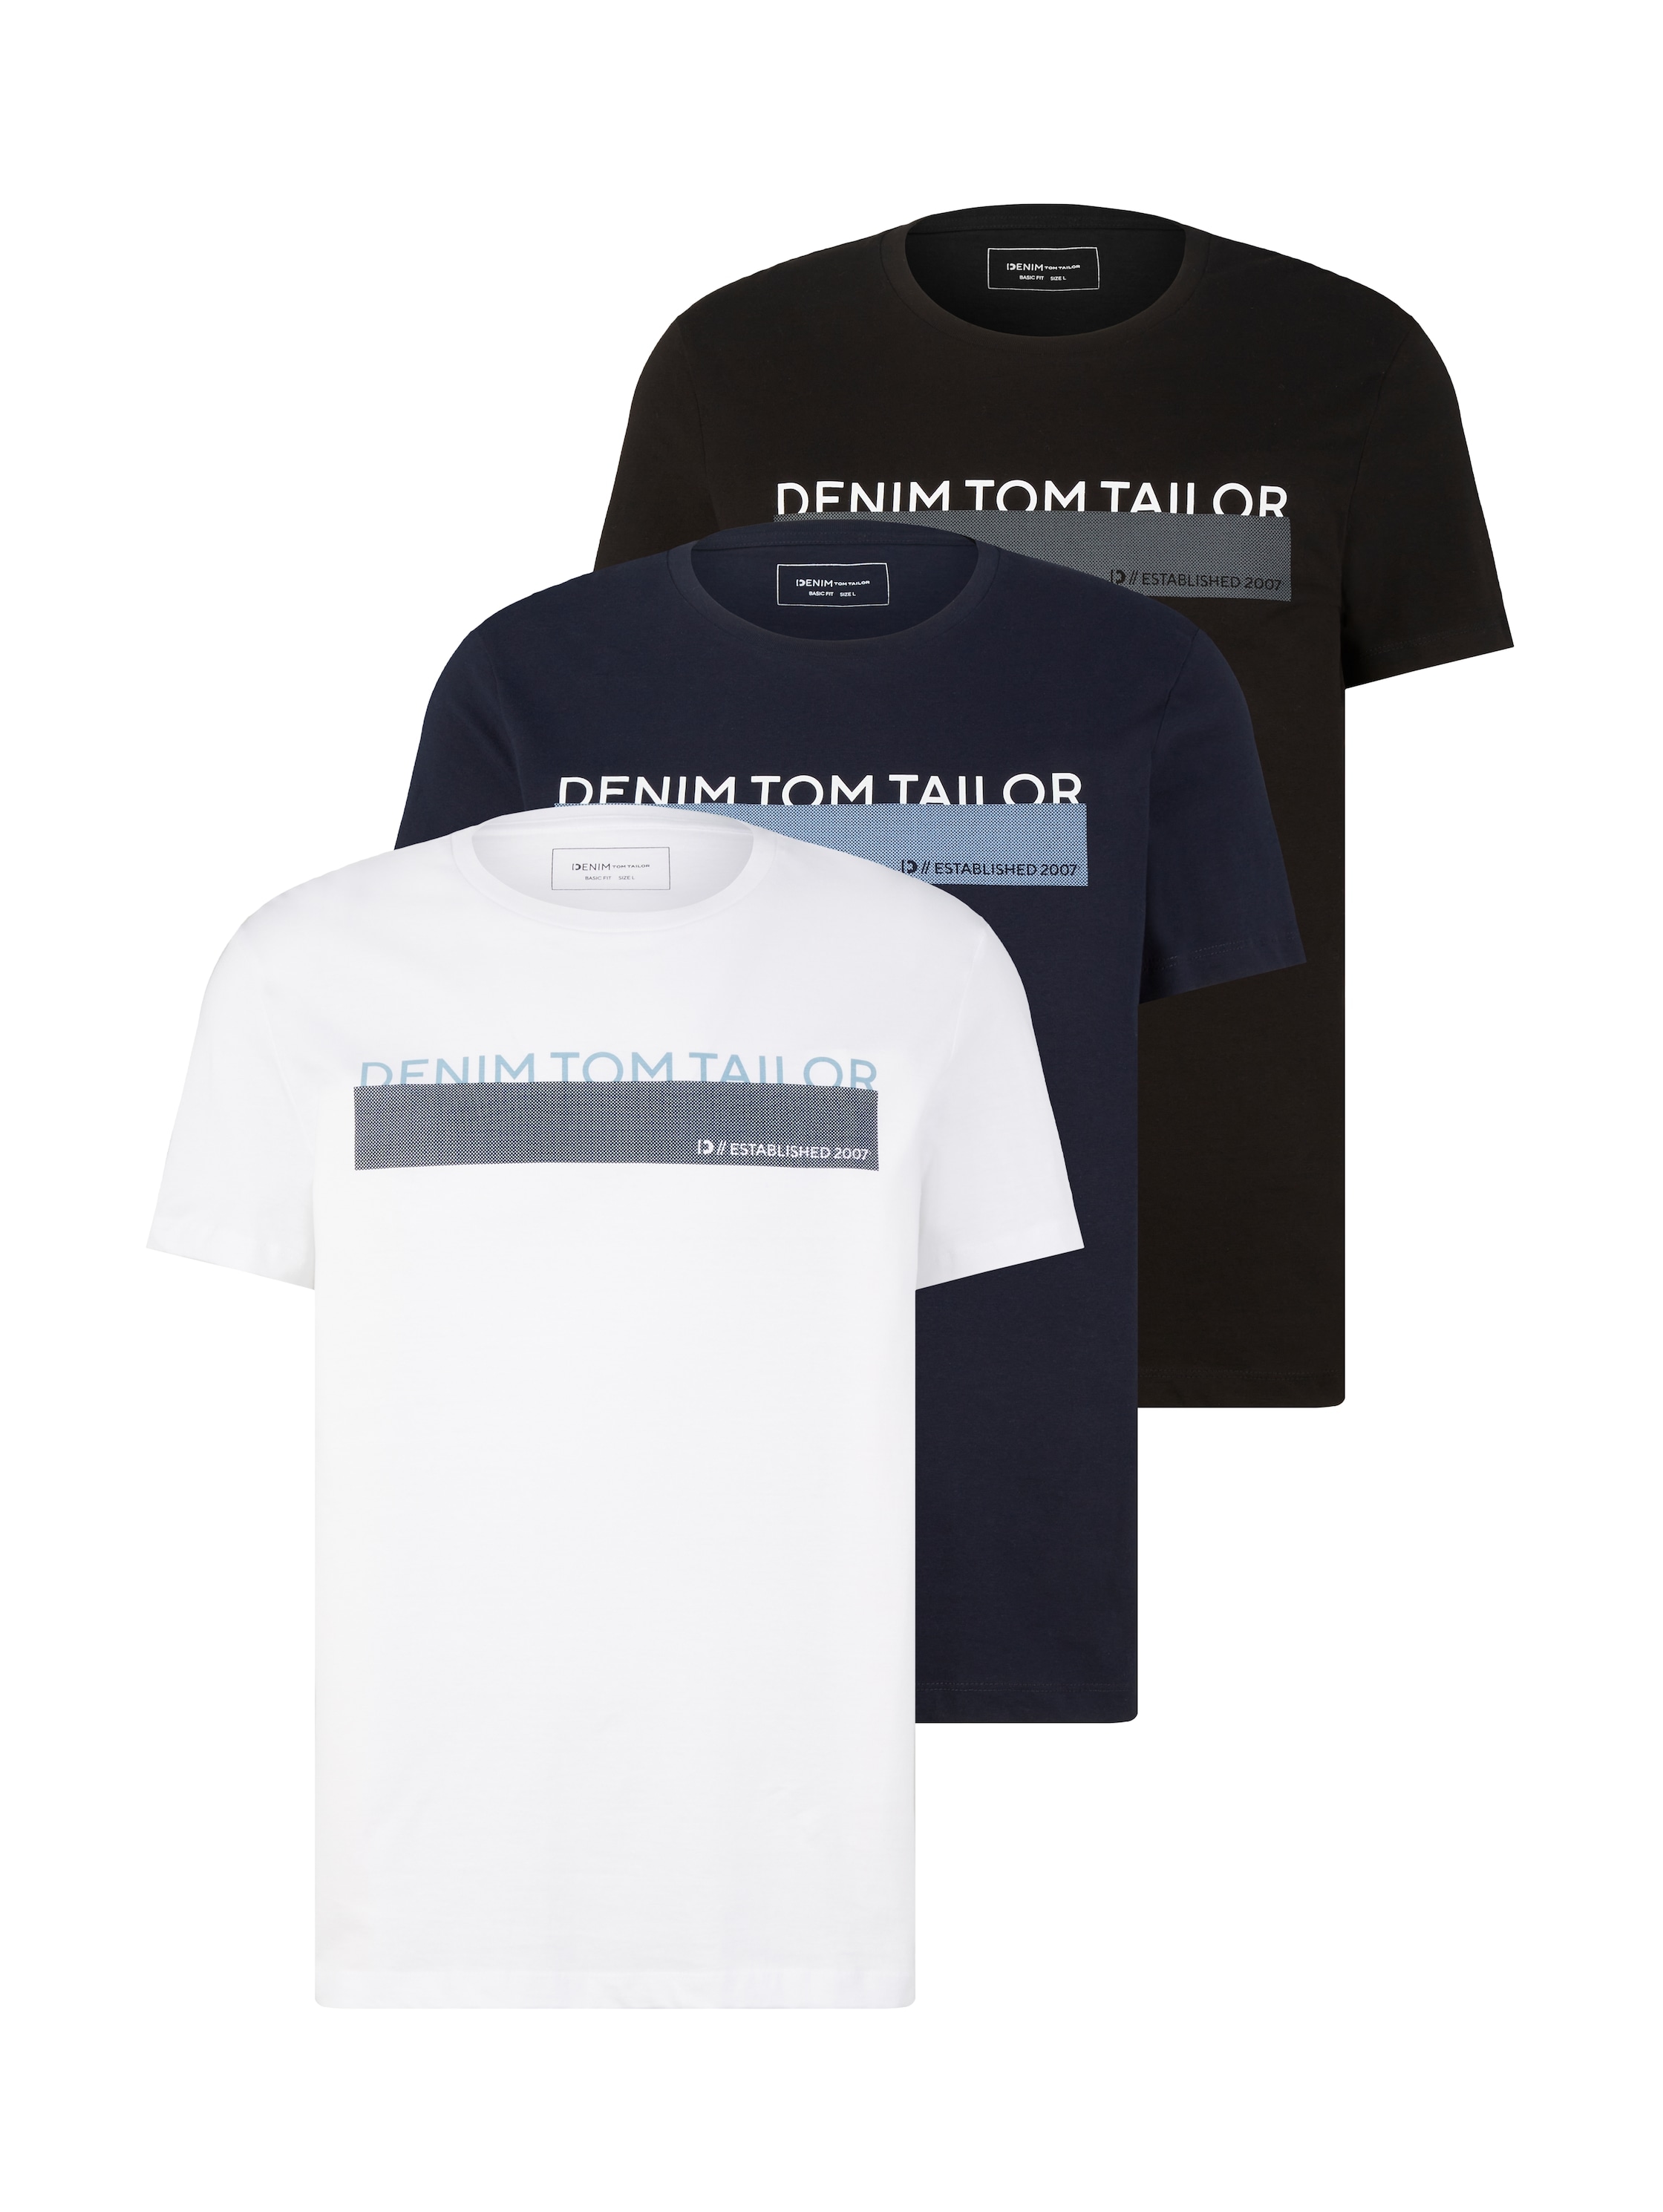 TOM TAILOR Denim T-Shirt, in verschiedenen Farben